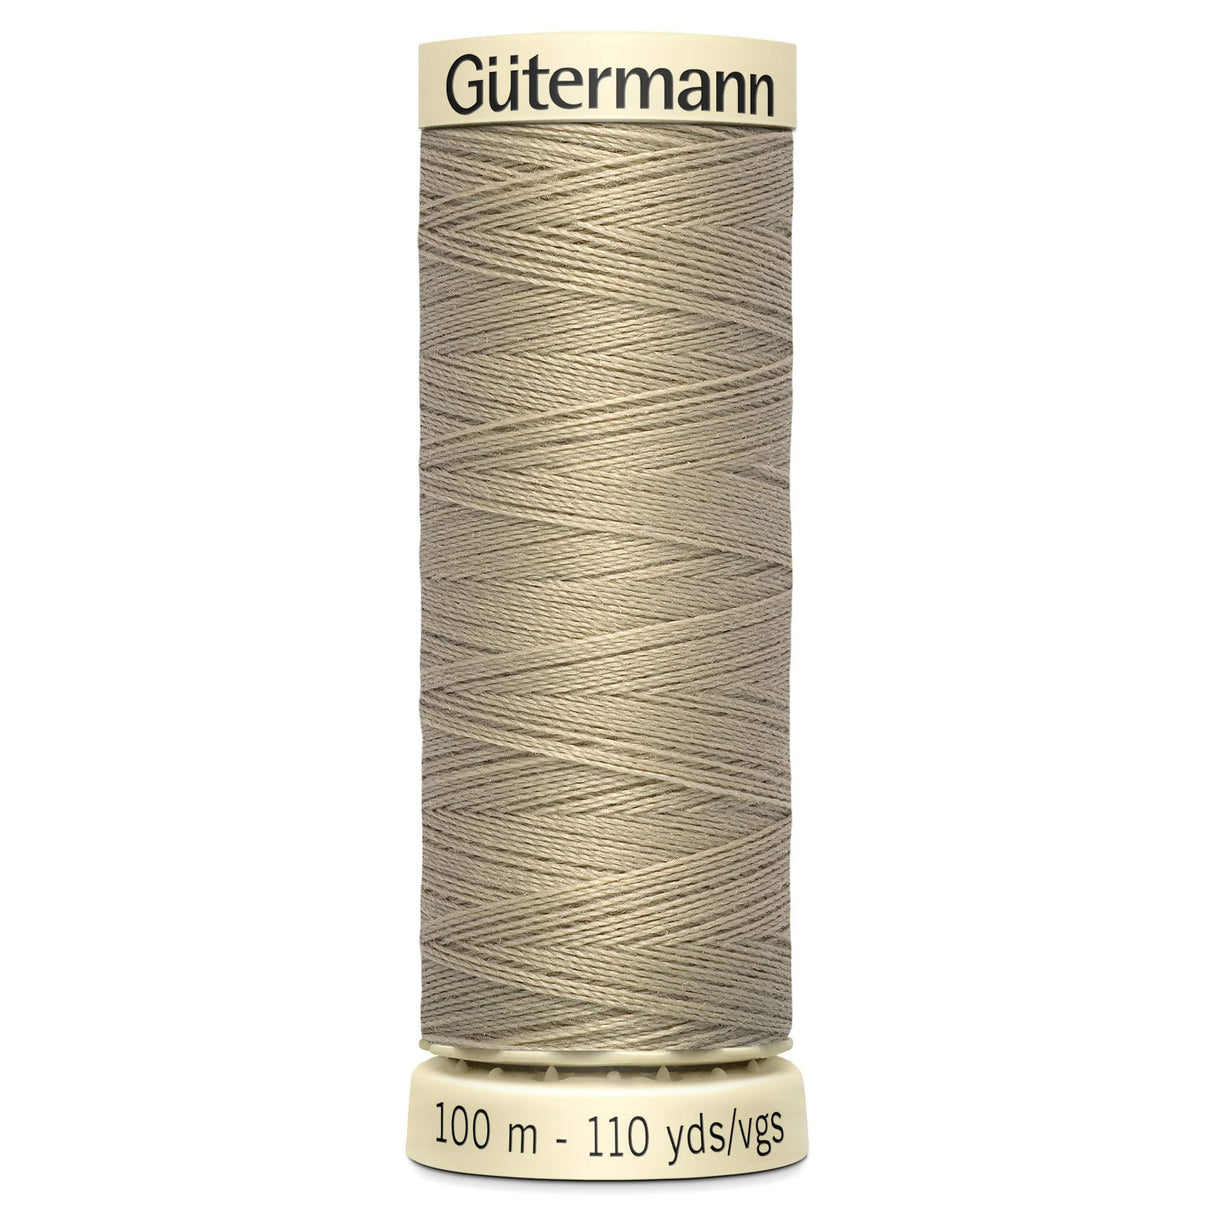 Groves Haberdashery 131 Gutermann Thread Sewing Cotton 100 m Black to Pink